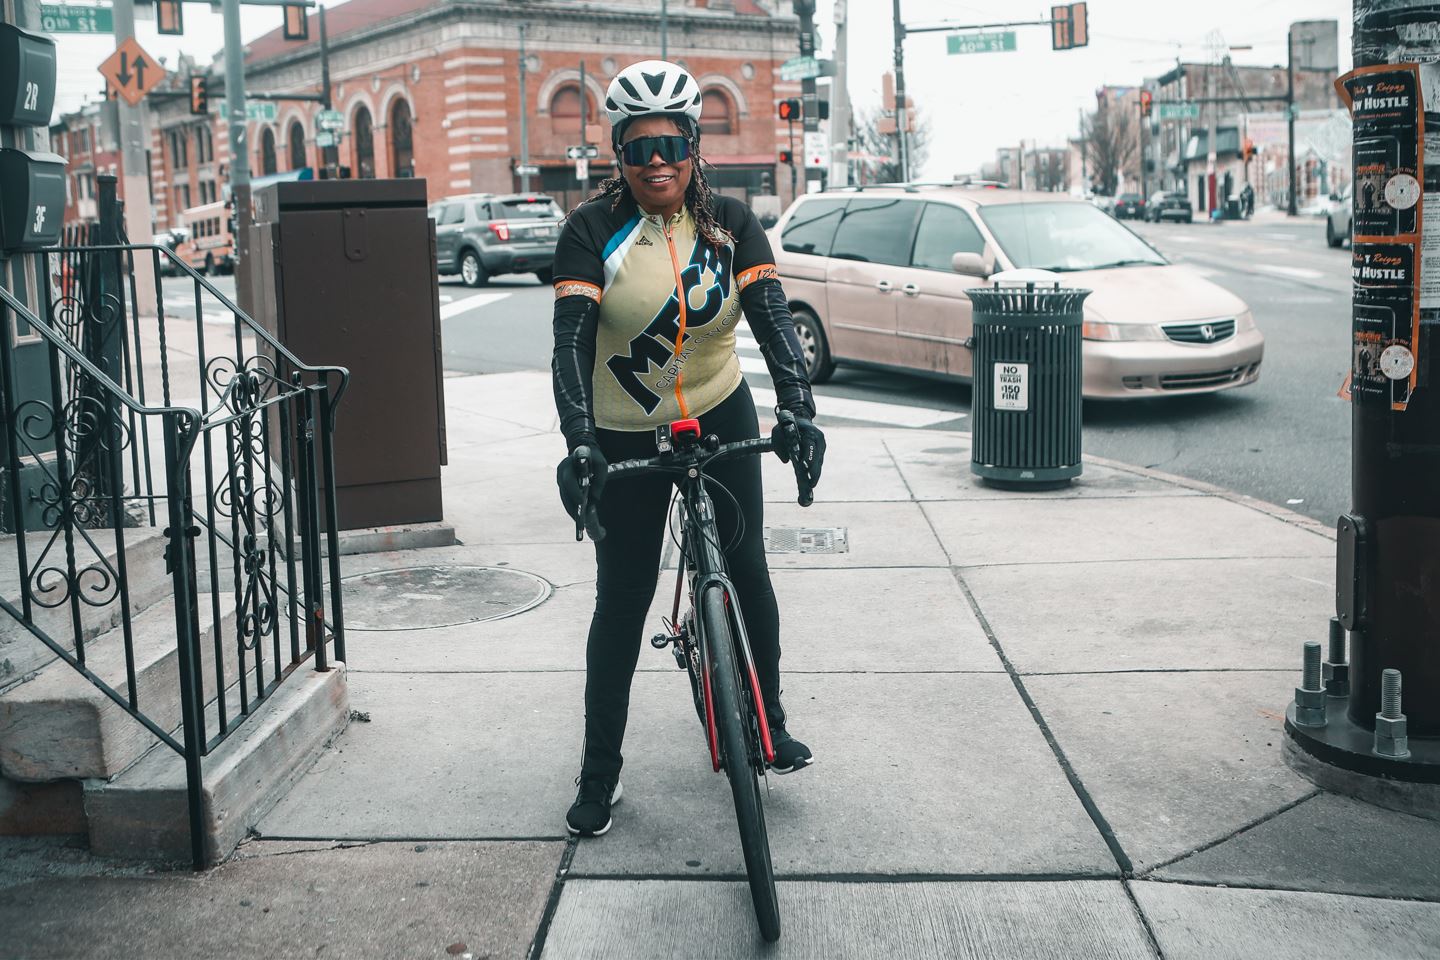 Claire Washington on her bike in Philadelphia.